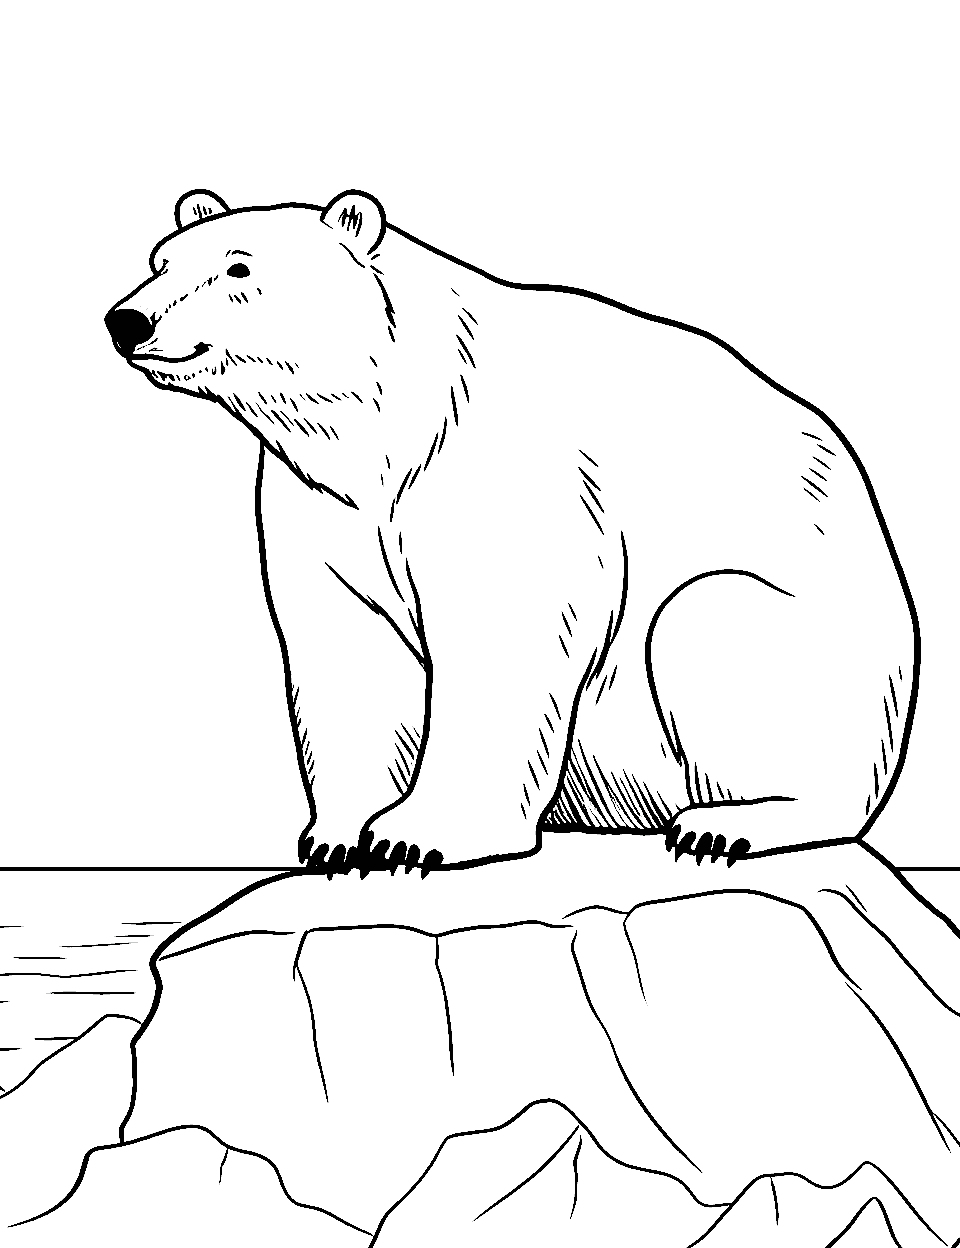 Polar Bear on Iceberg Coloring Page - A polar bear sitting on an iceberg, enjoying the cool breeze.